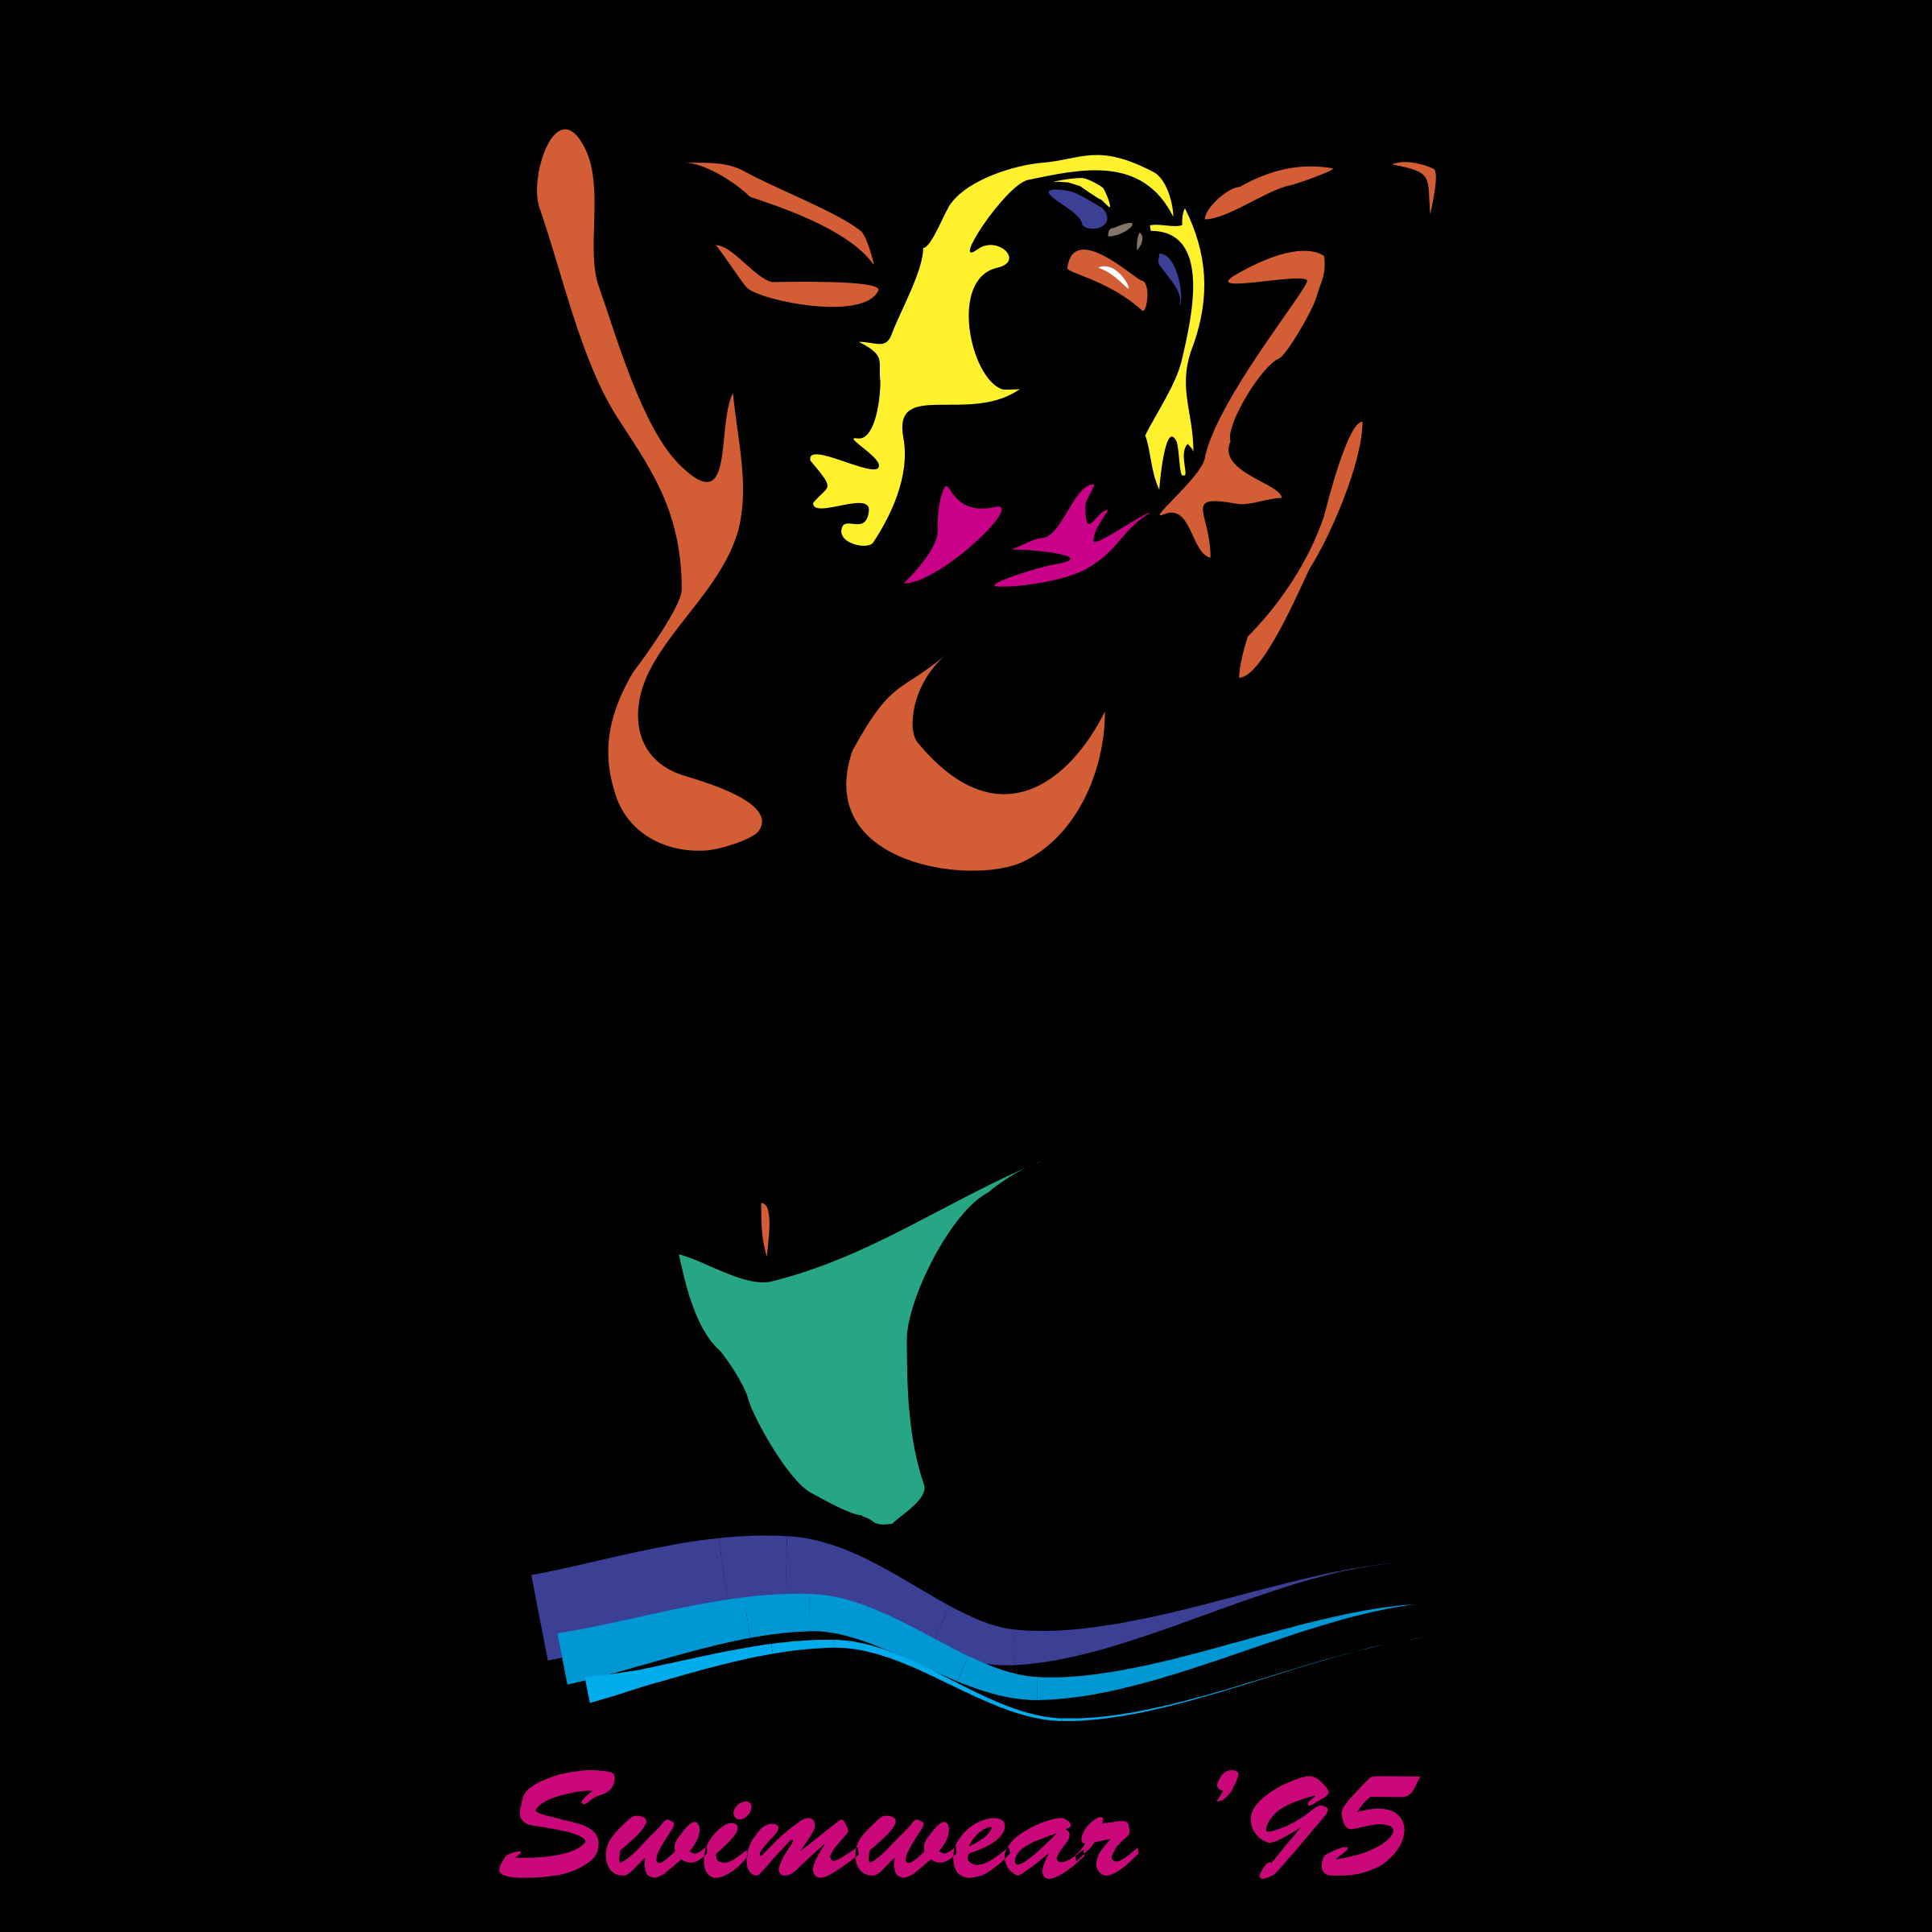 Swimwear Logo - Swimwear 95 Logo PNG Transparent & SVG Vector - Freebie Supply